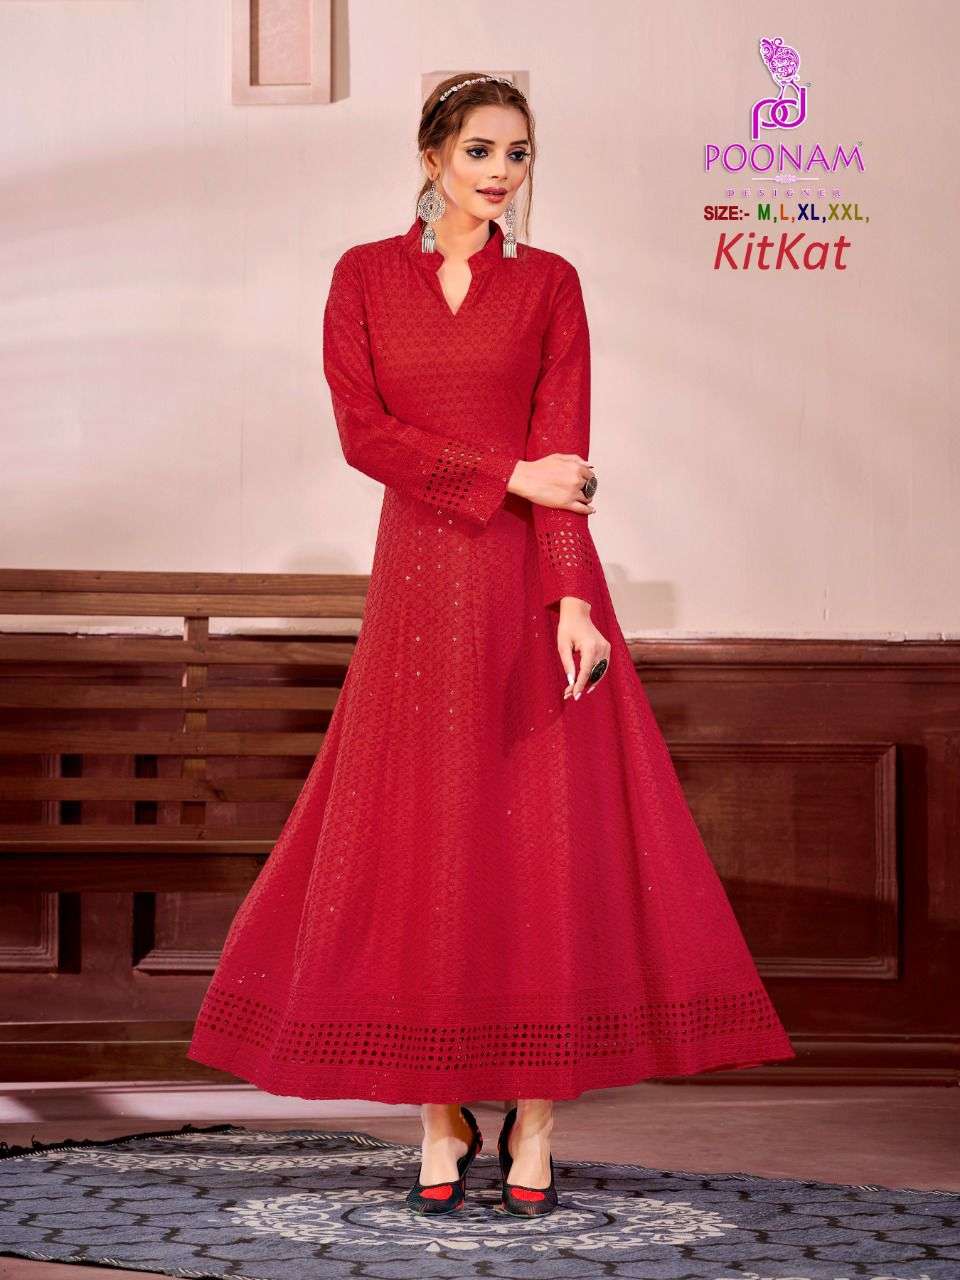 1650287625721604570 poonam kit kat fancy chikan work rayon kurti gown designs 4 2022 04 15 19 11 46